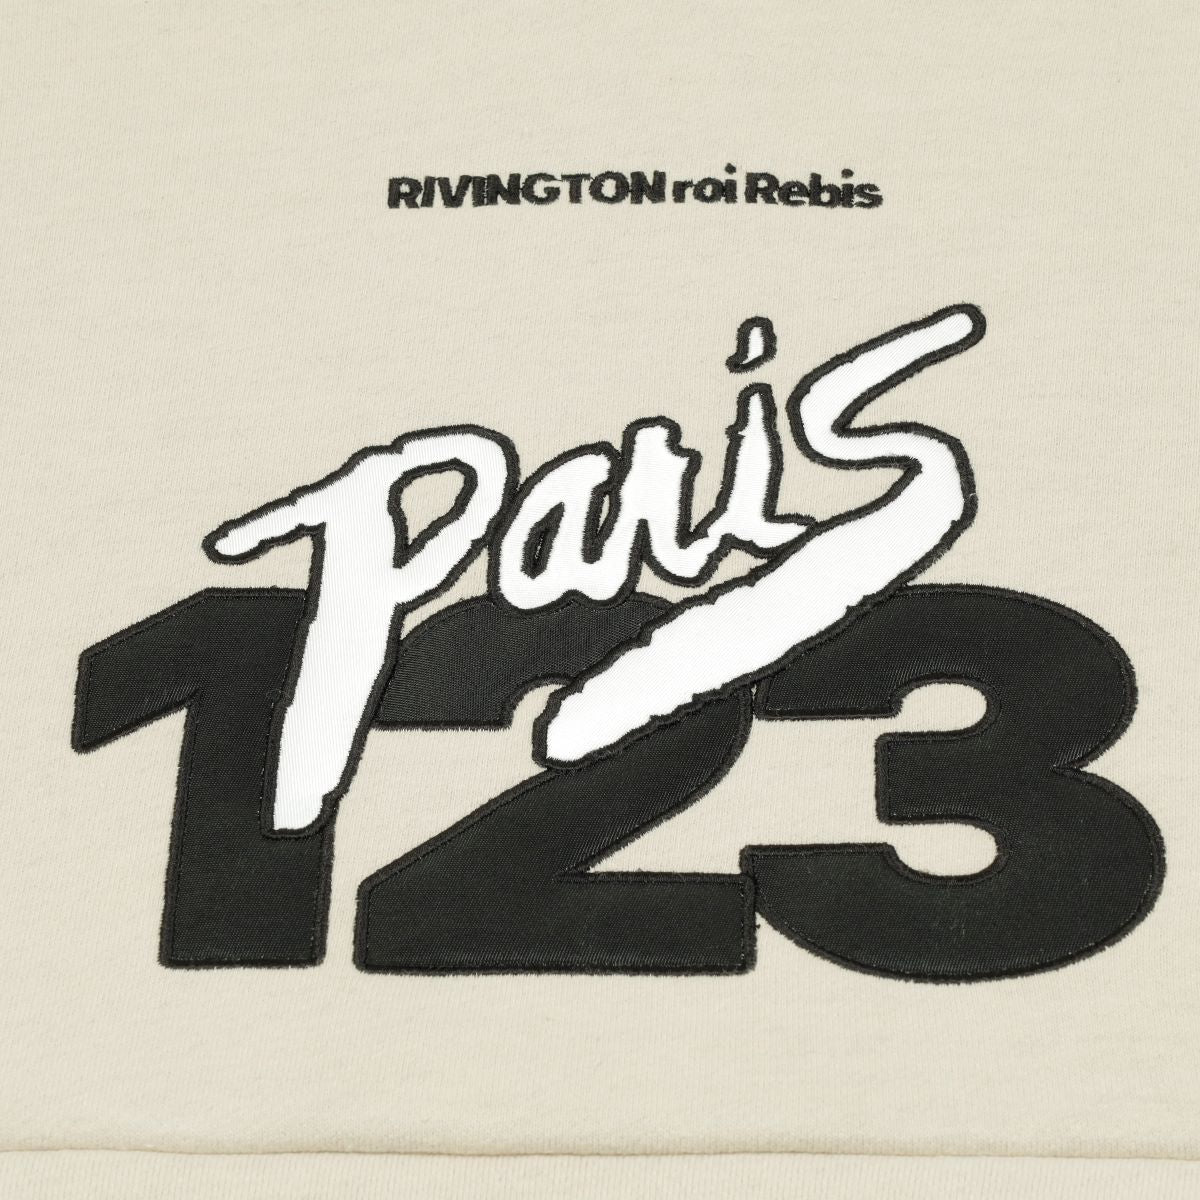 RRR123 - RIVINGTON roi rebis - CVA IMITATION OF PARIS HOODIE